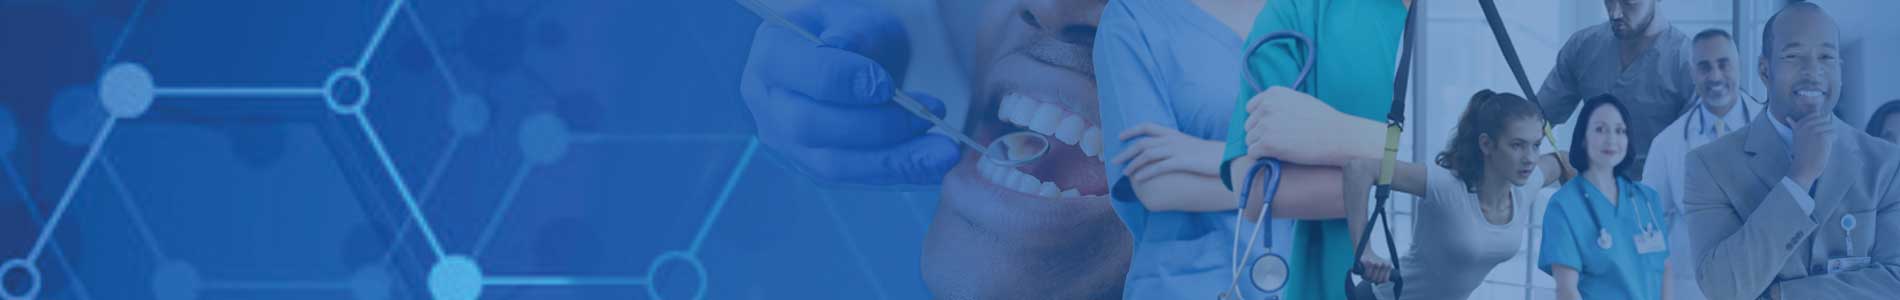 Dental Hygiene Application Requirements banner image